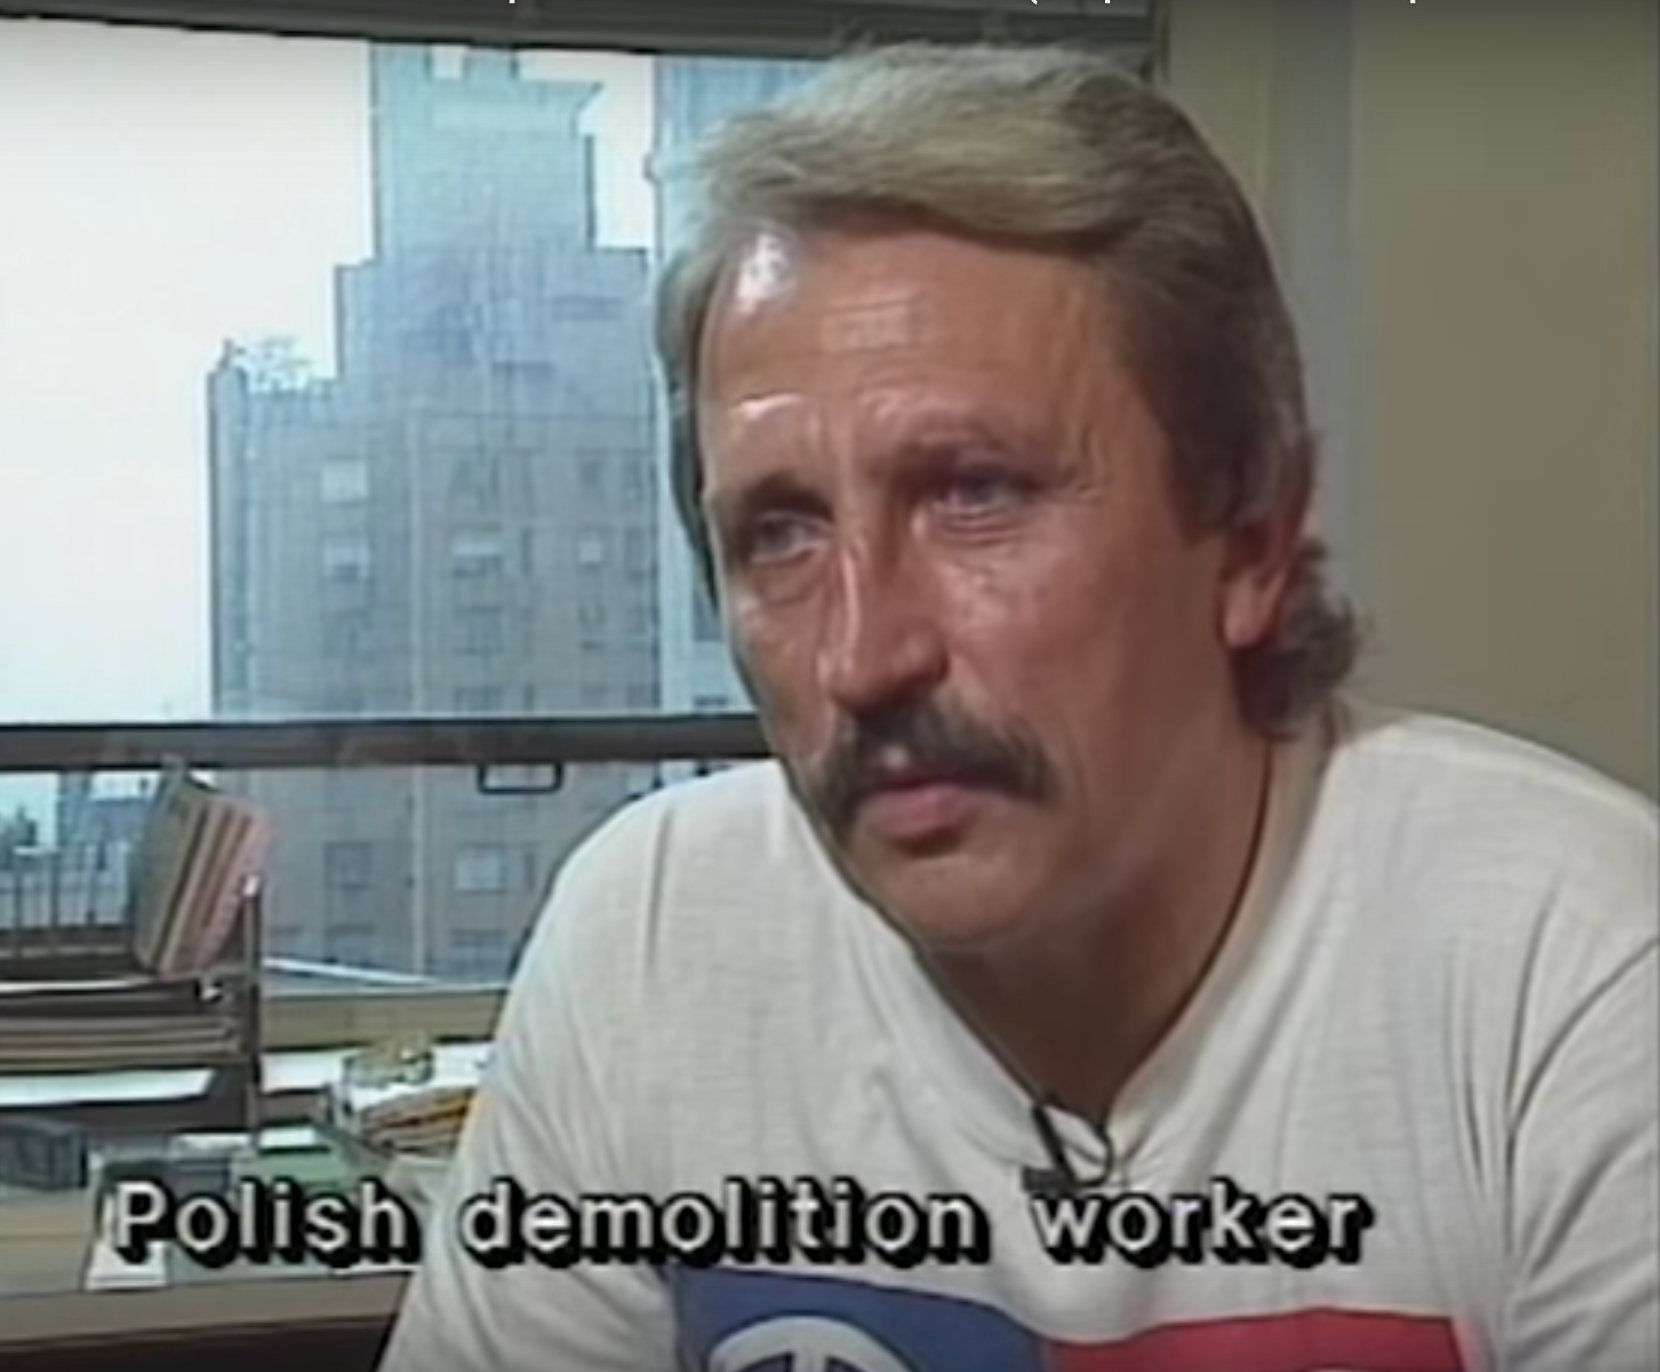 Polish demolition worker